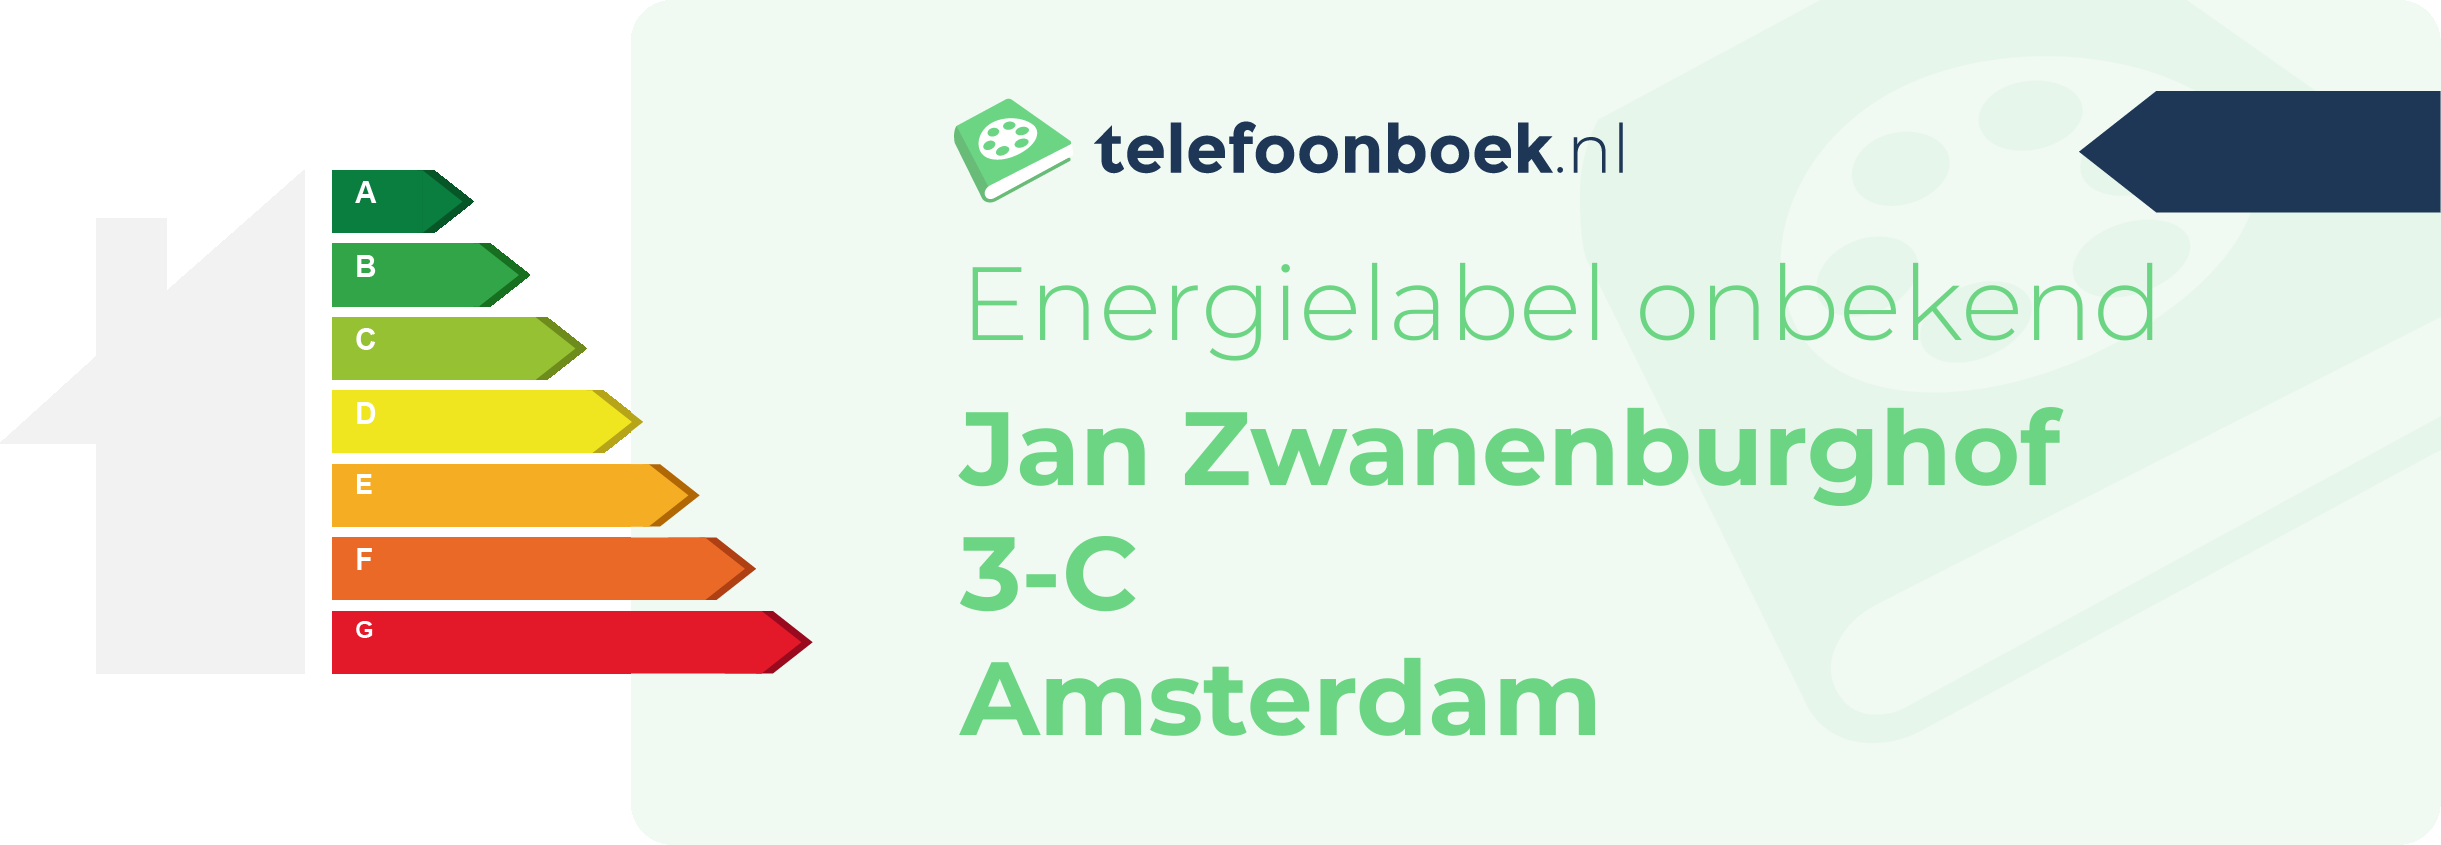 Energielabel Jan Zwanenburghof 3-C Amsterdam